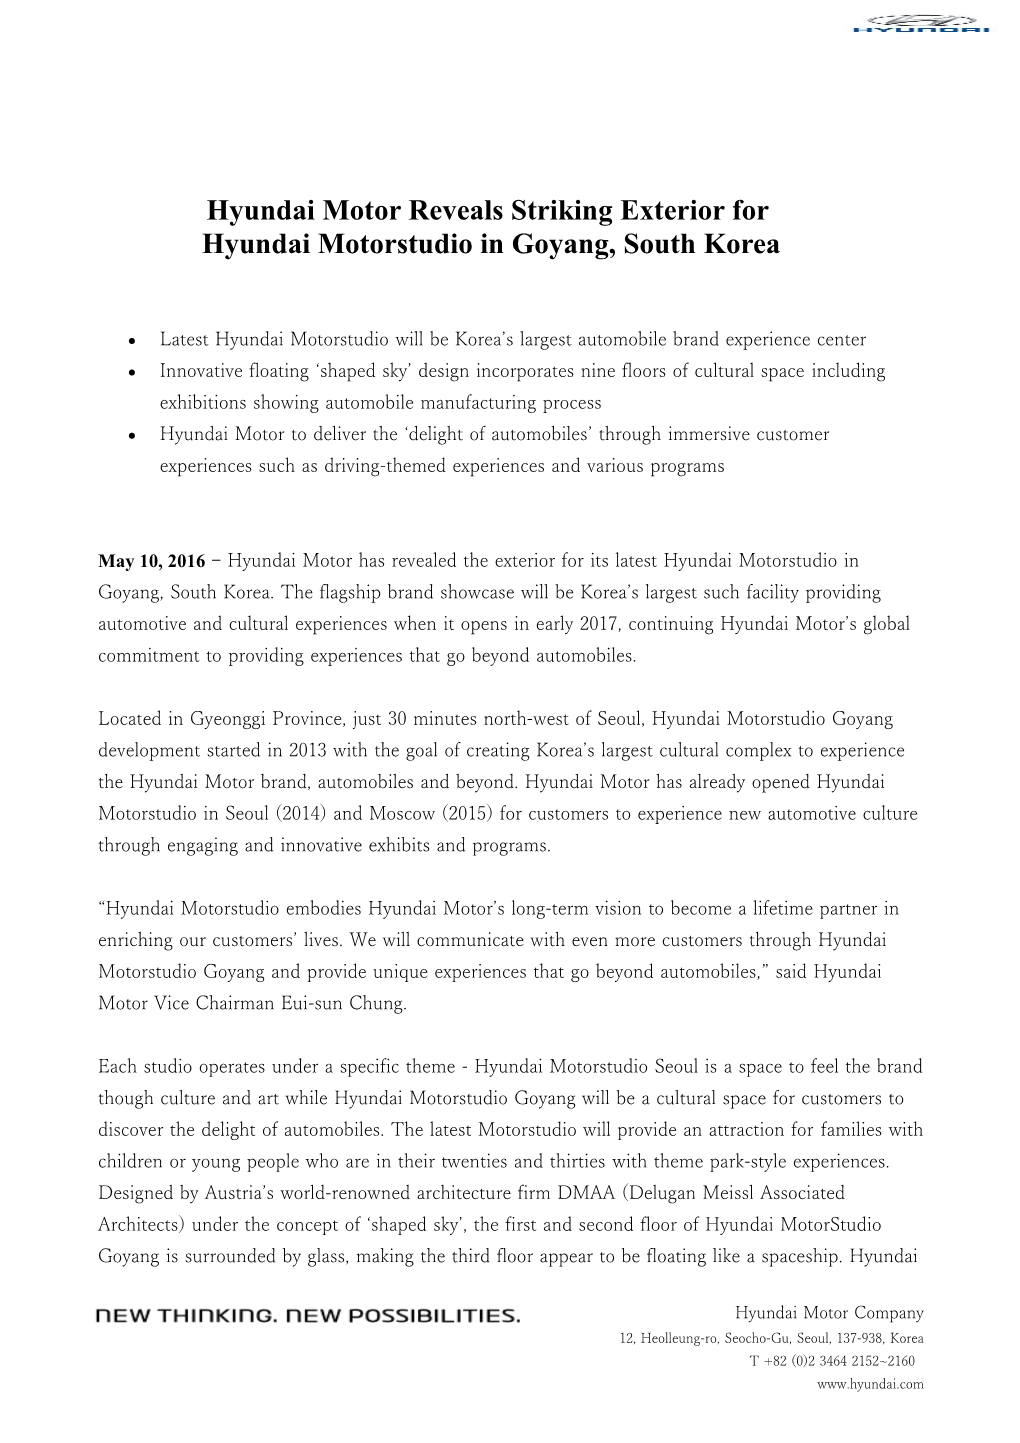 Hyundai Motor Revealsstriking Exterior For